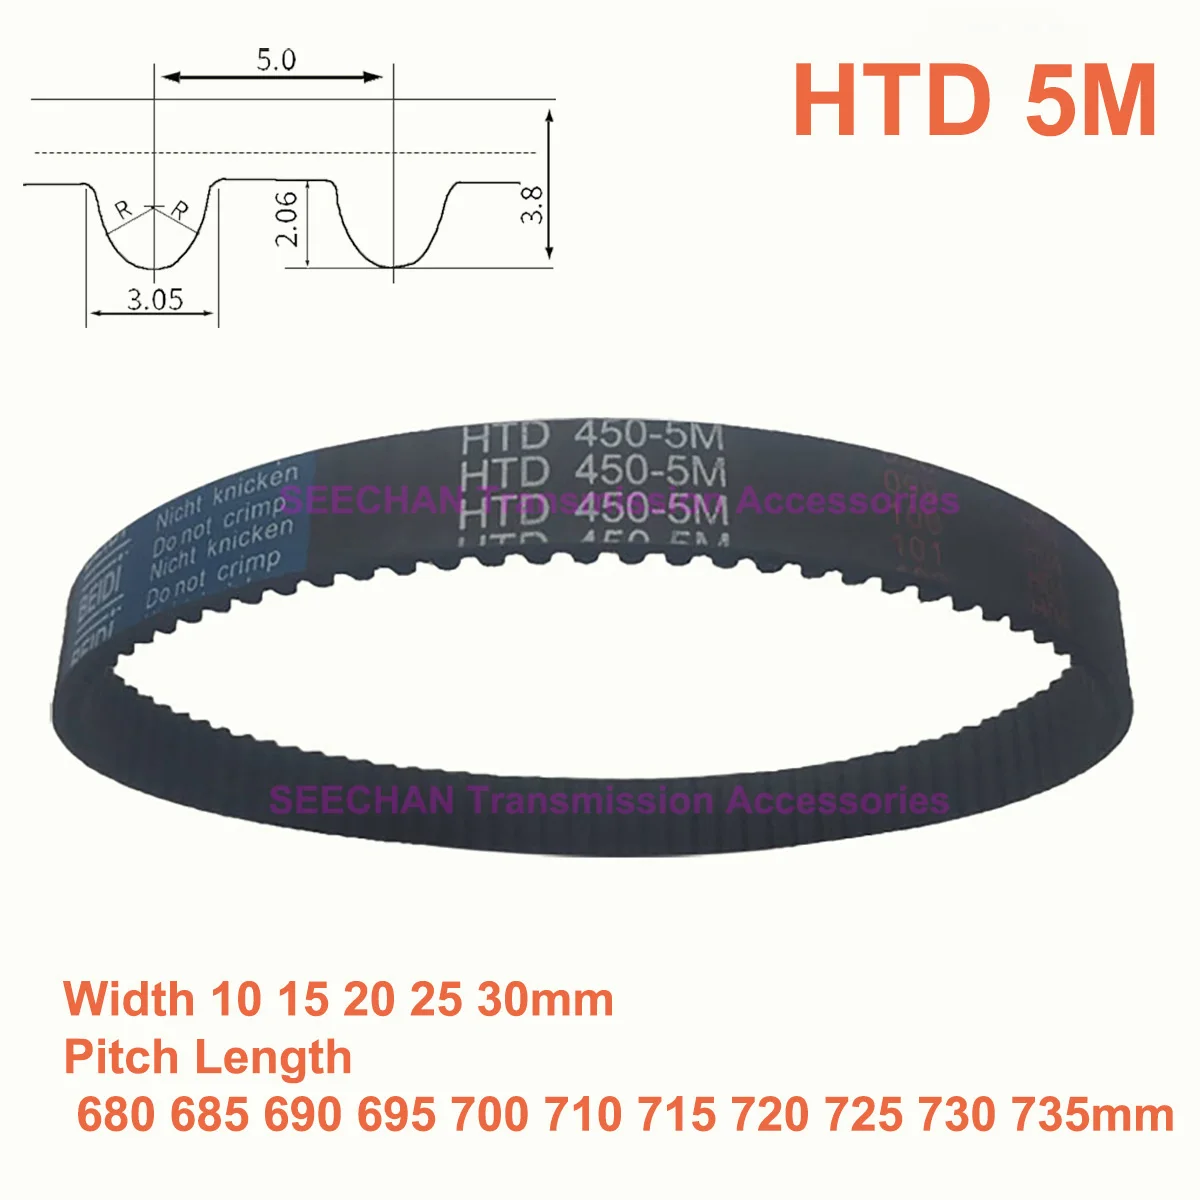 HTD 5M Rubber Timing Belt Width 10 15 20 25 30mm Synchronous Belt Pitch Length 680 685 690 695 700 710 715 720 725 730 735mm